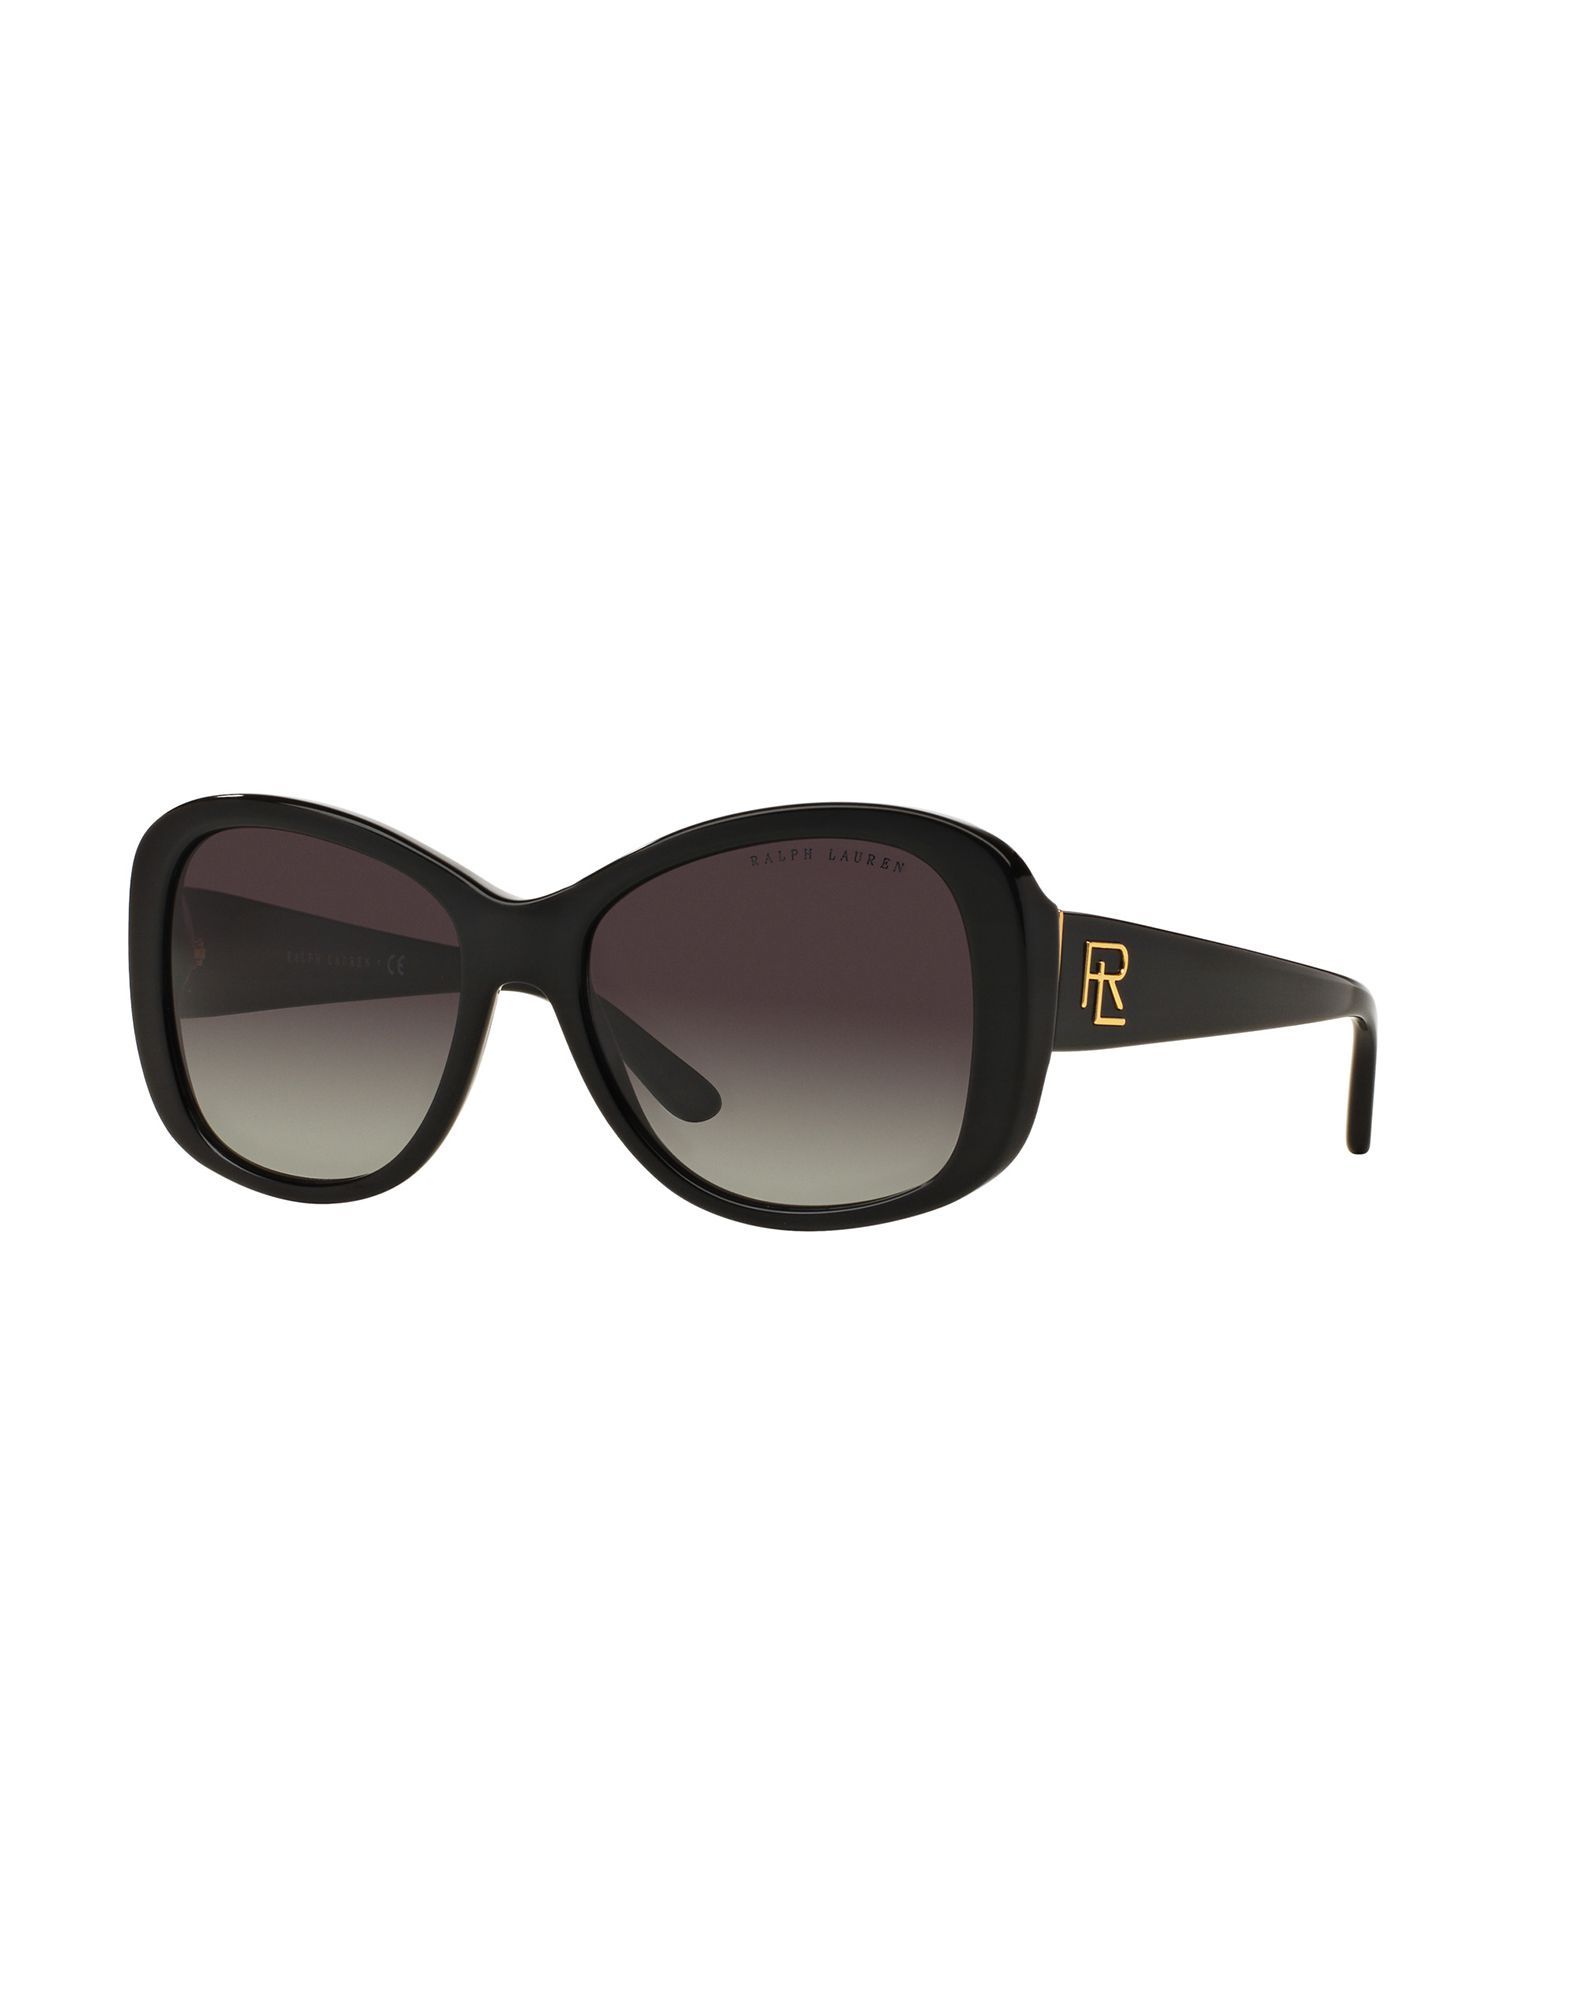 POLO RALPH LAUREN Sunglasses | YOOX (US)